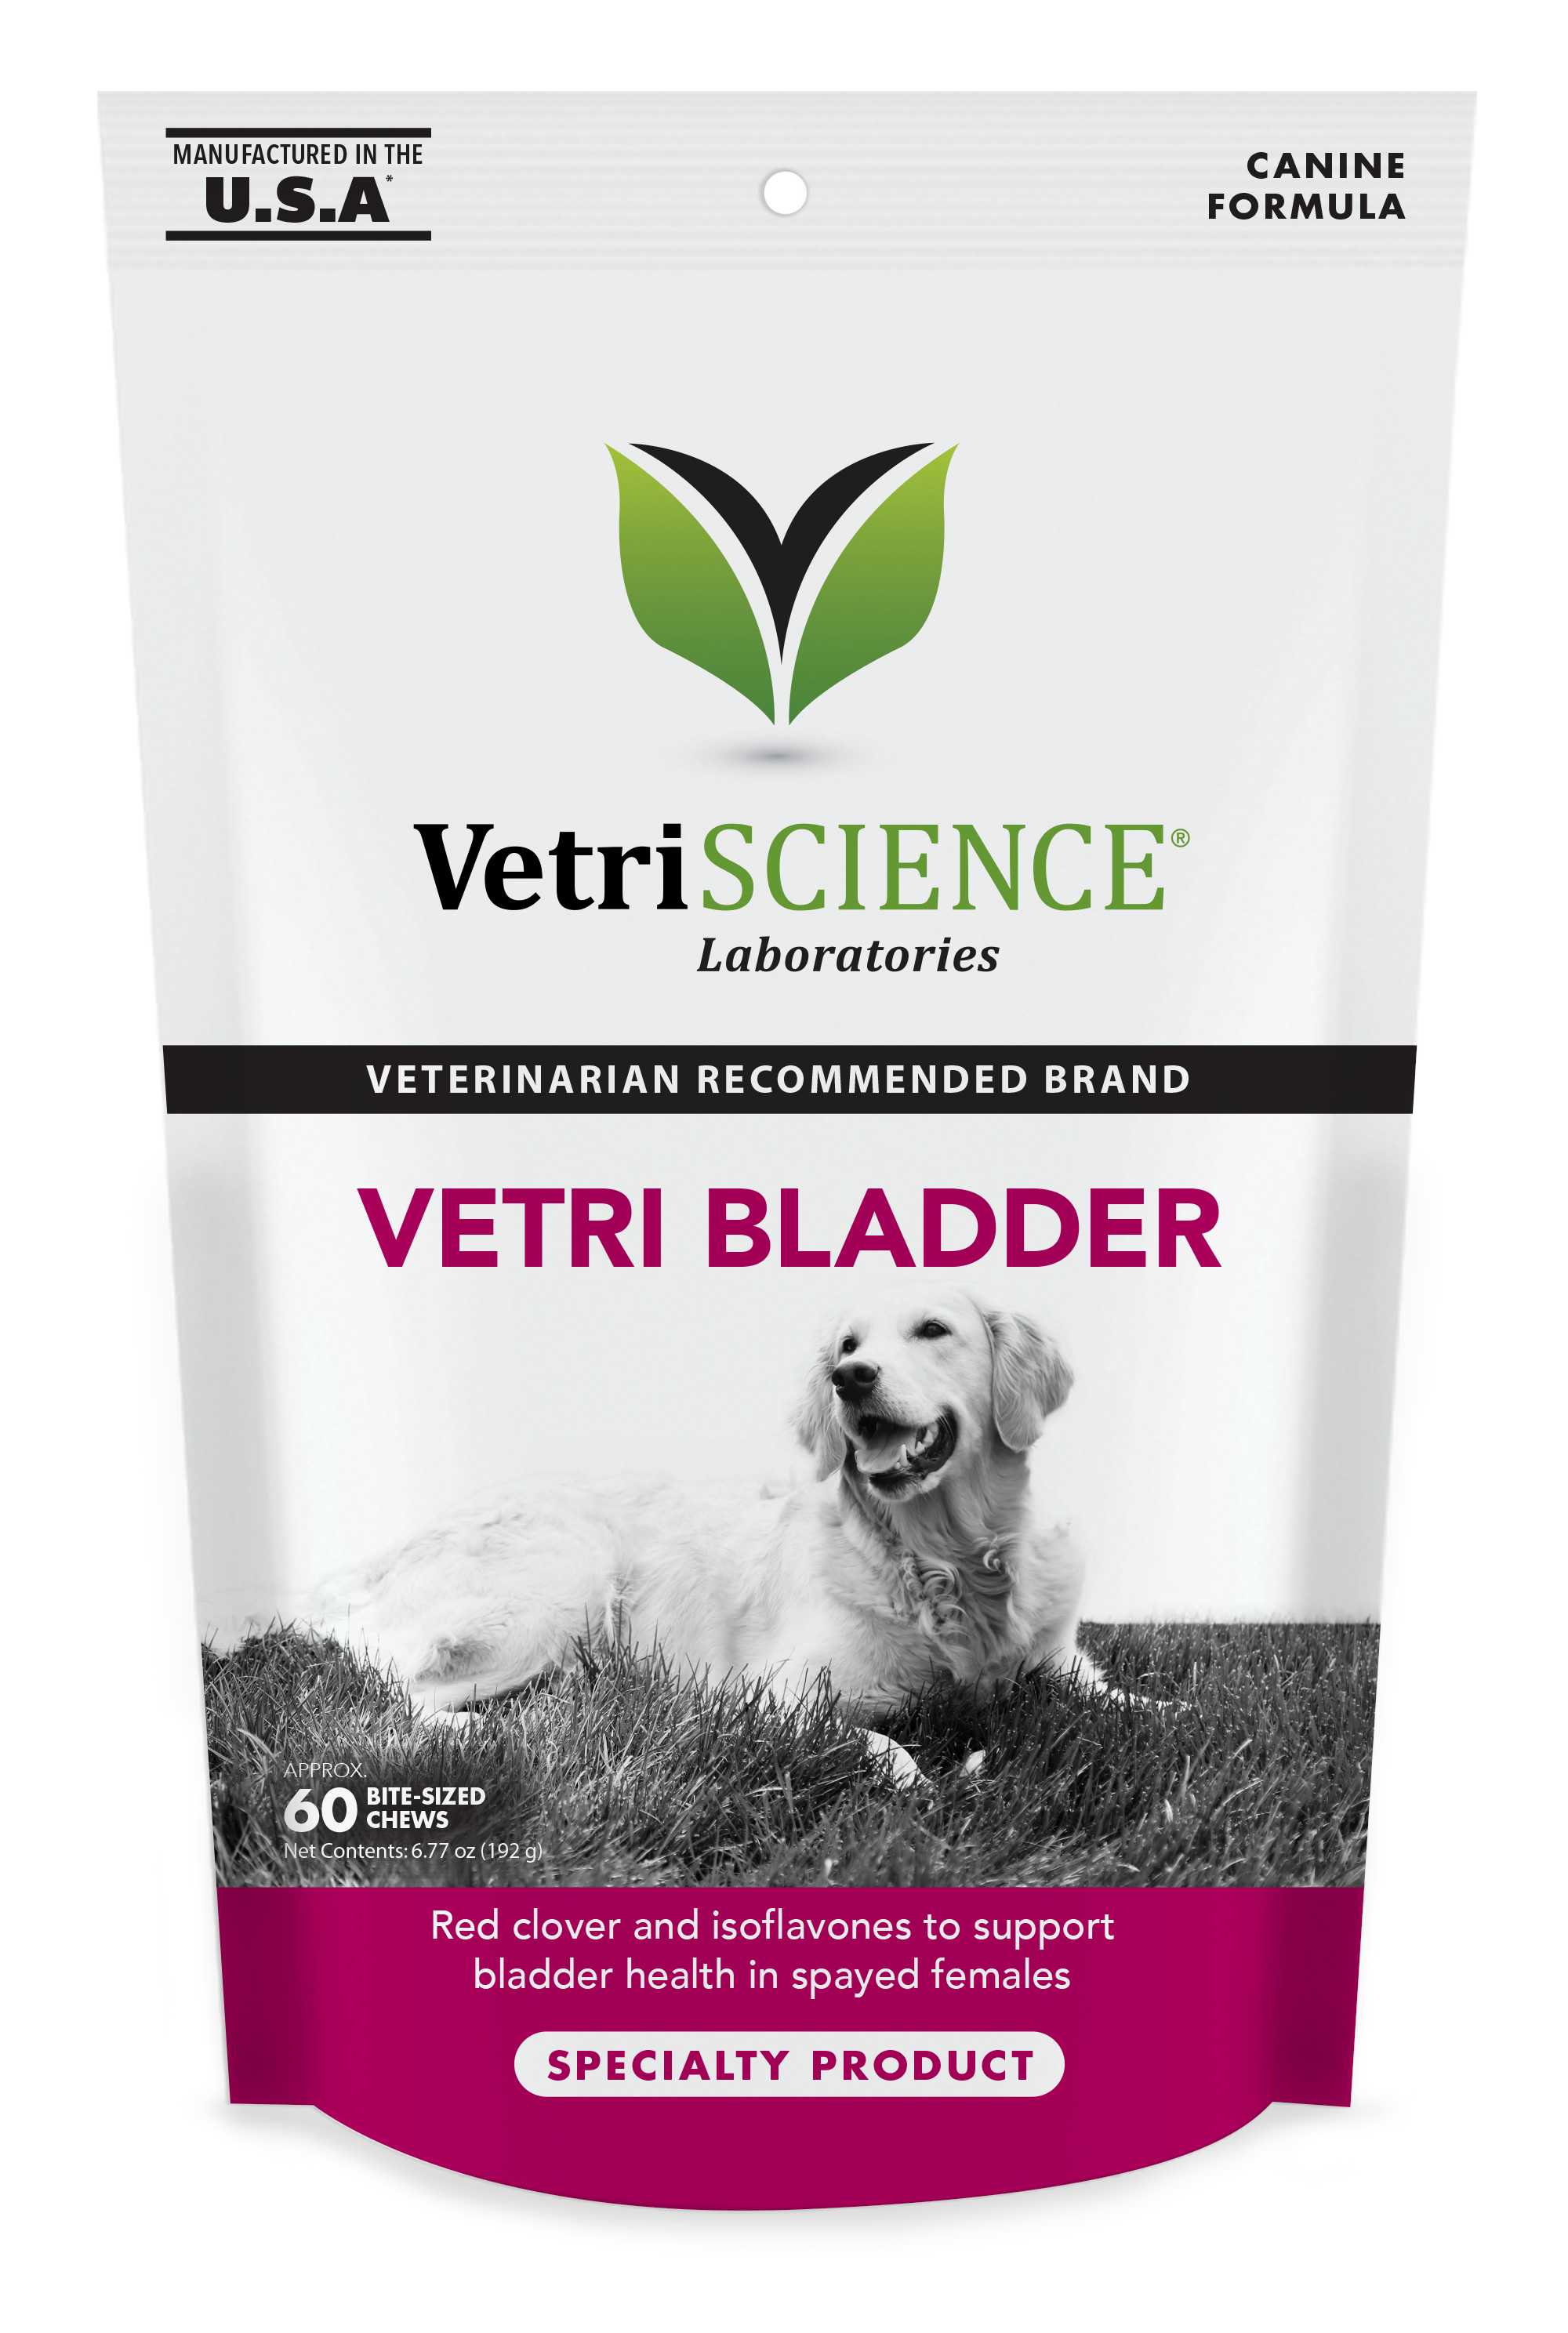 Vetri Bladder Canine - supplement to treat dog leaking urine